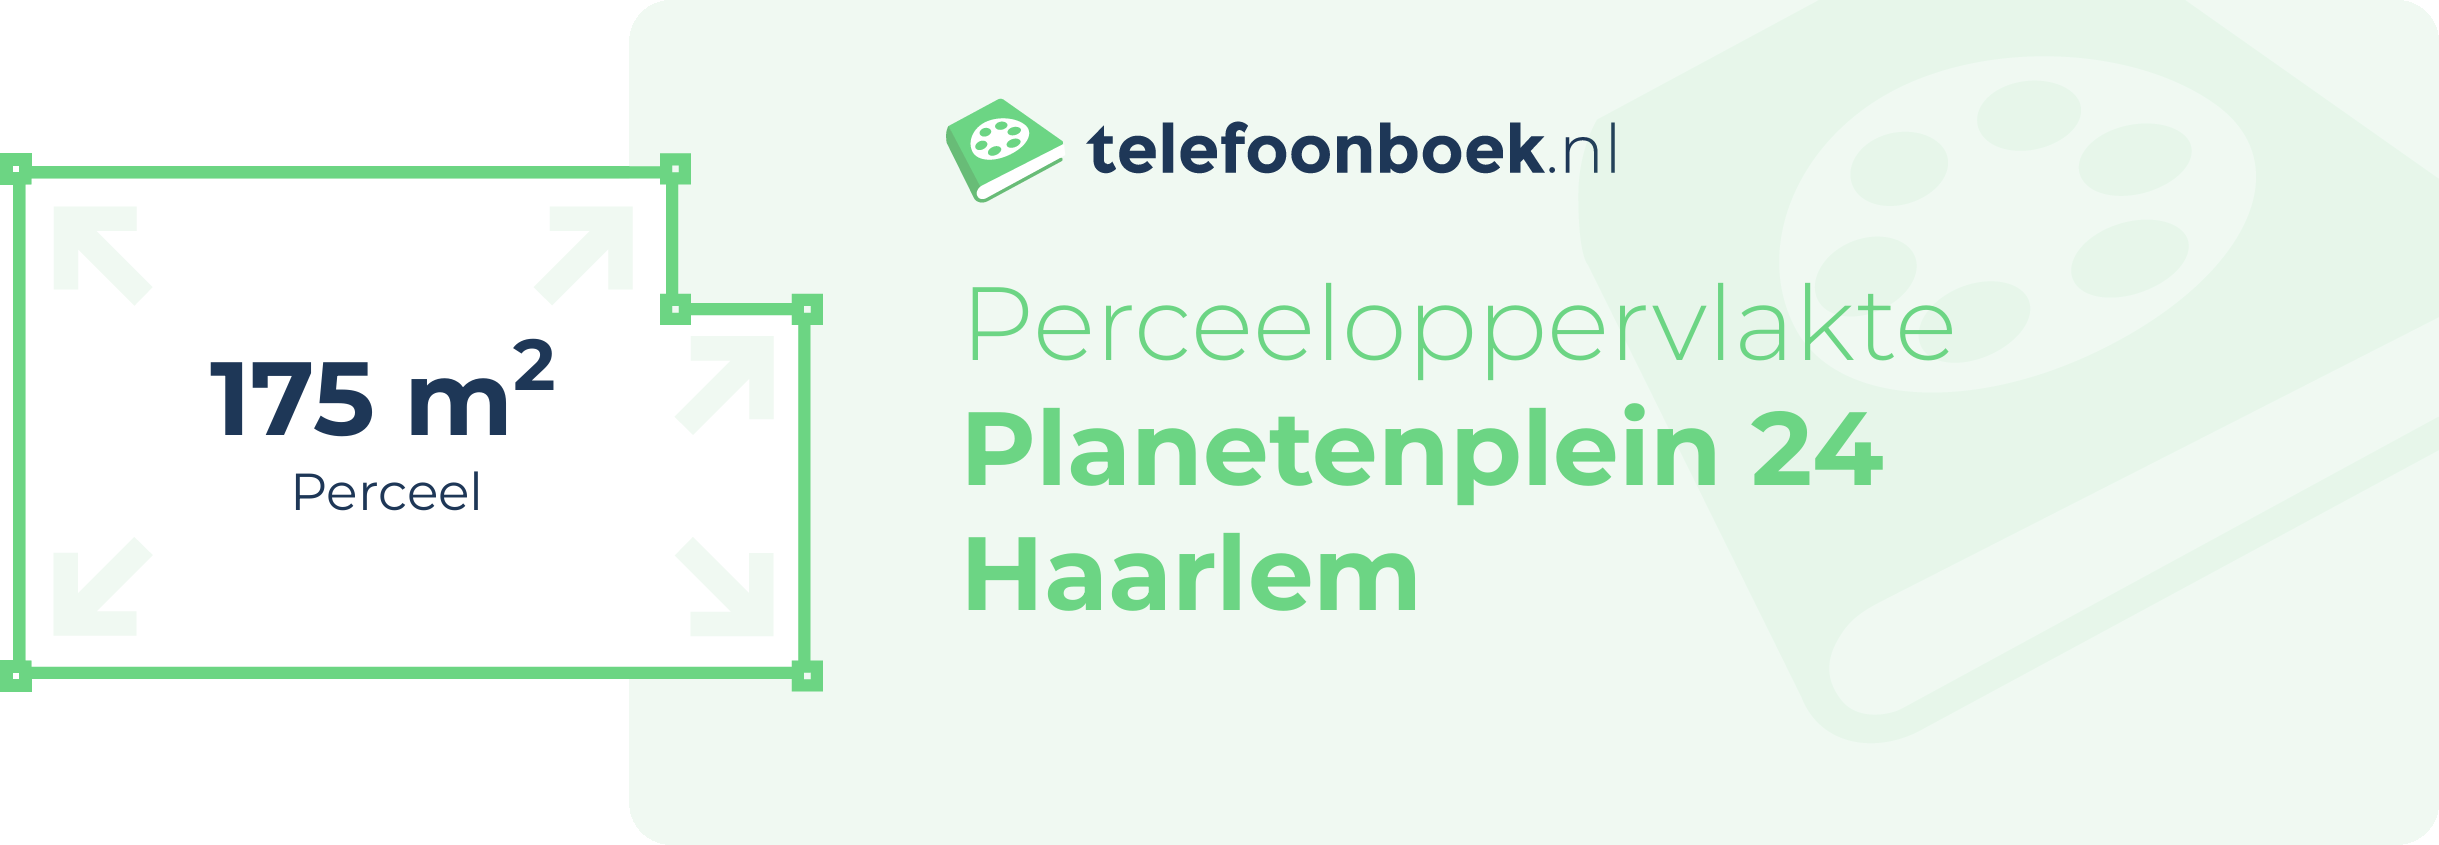 Perceeloppervlakte Planetenplein 24 Haarlem